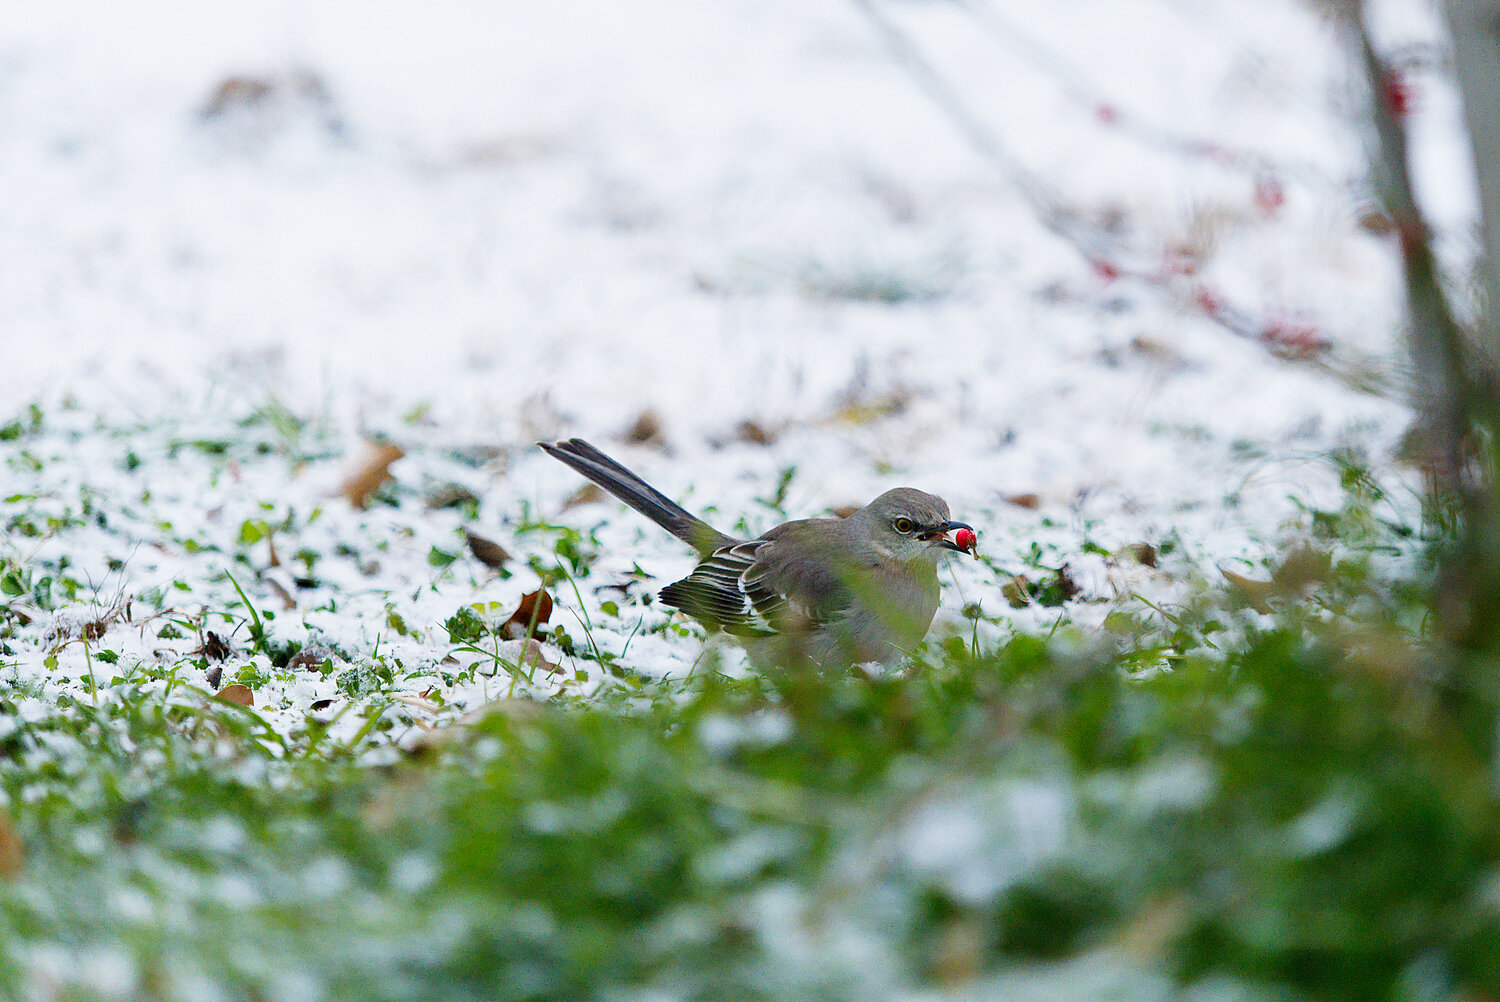 A mockingbird finds a tasty snack despite the recent cold temperatures.